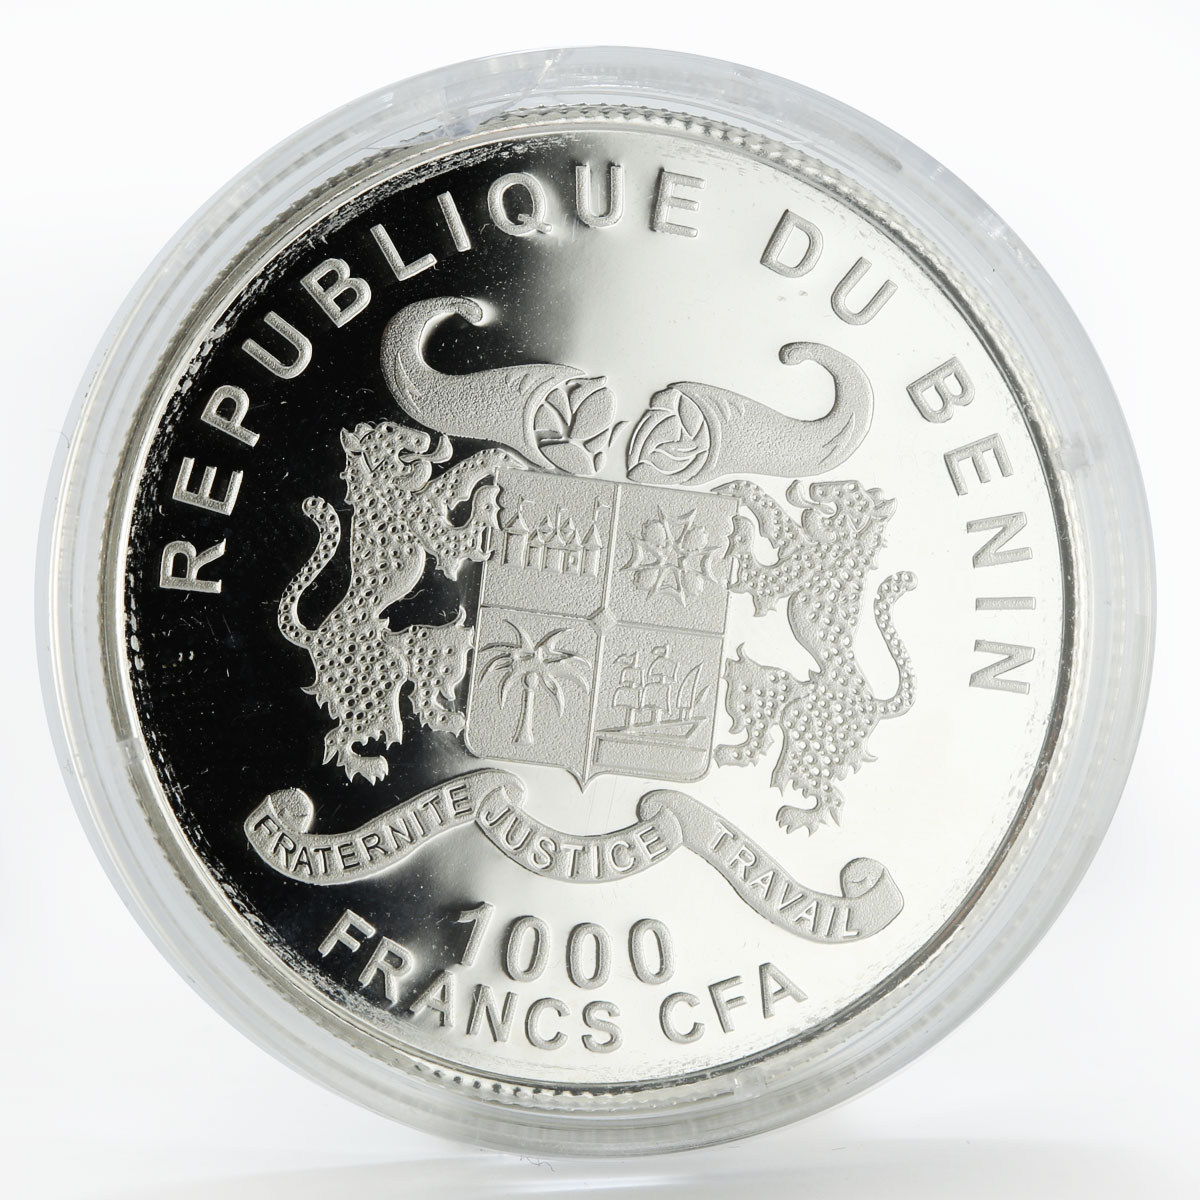 Benin 1000 francs Vladimir Vysotsky composer colored silver coin 2015